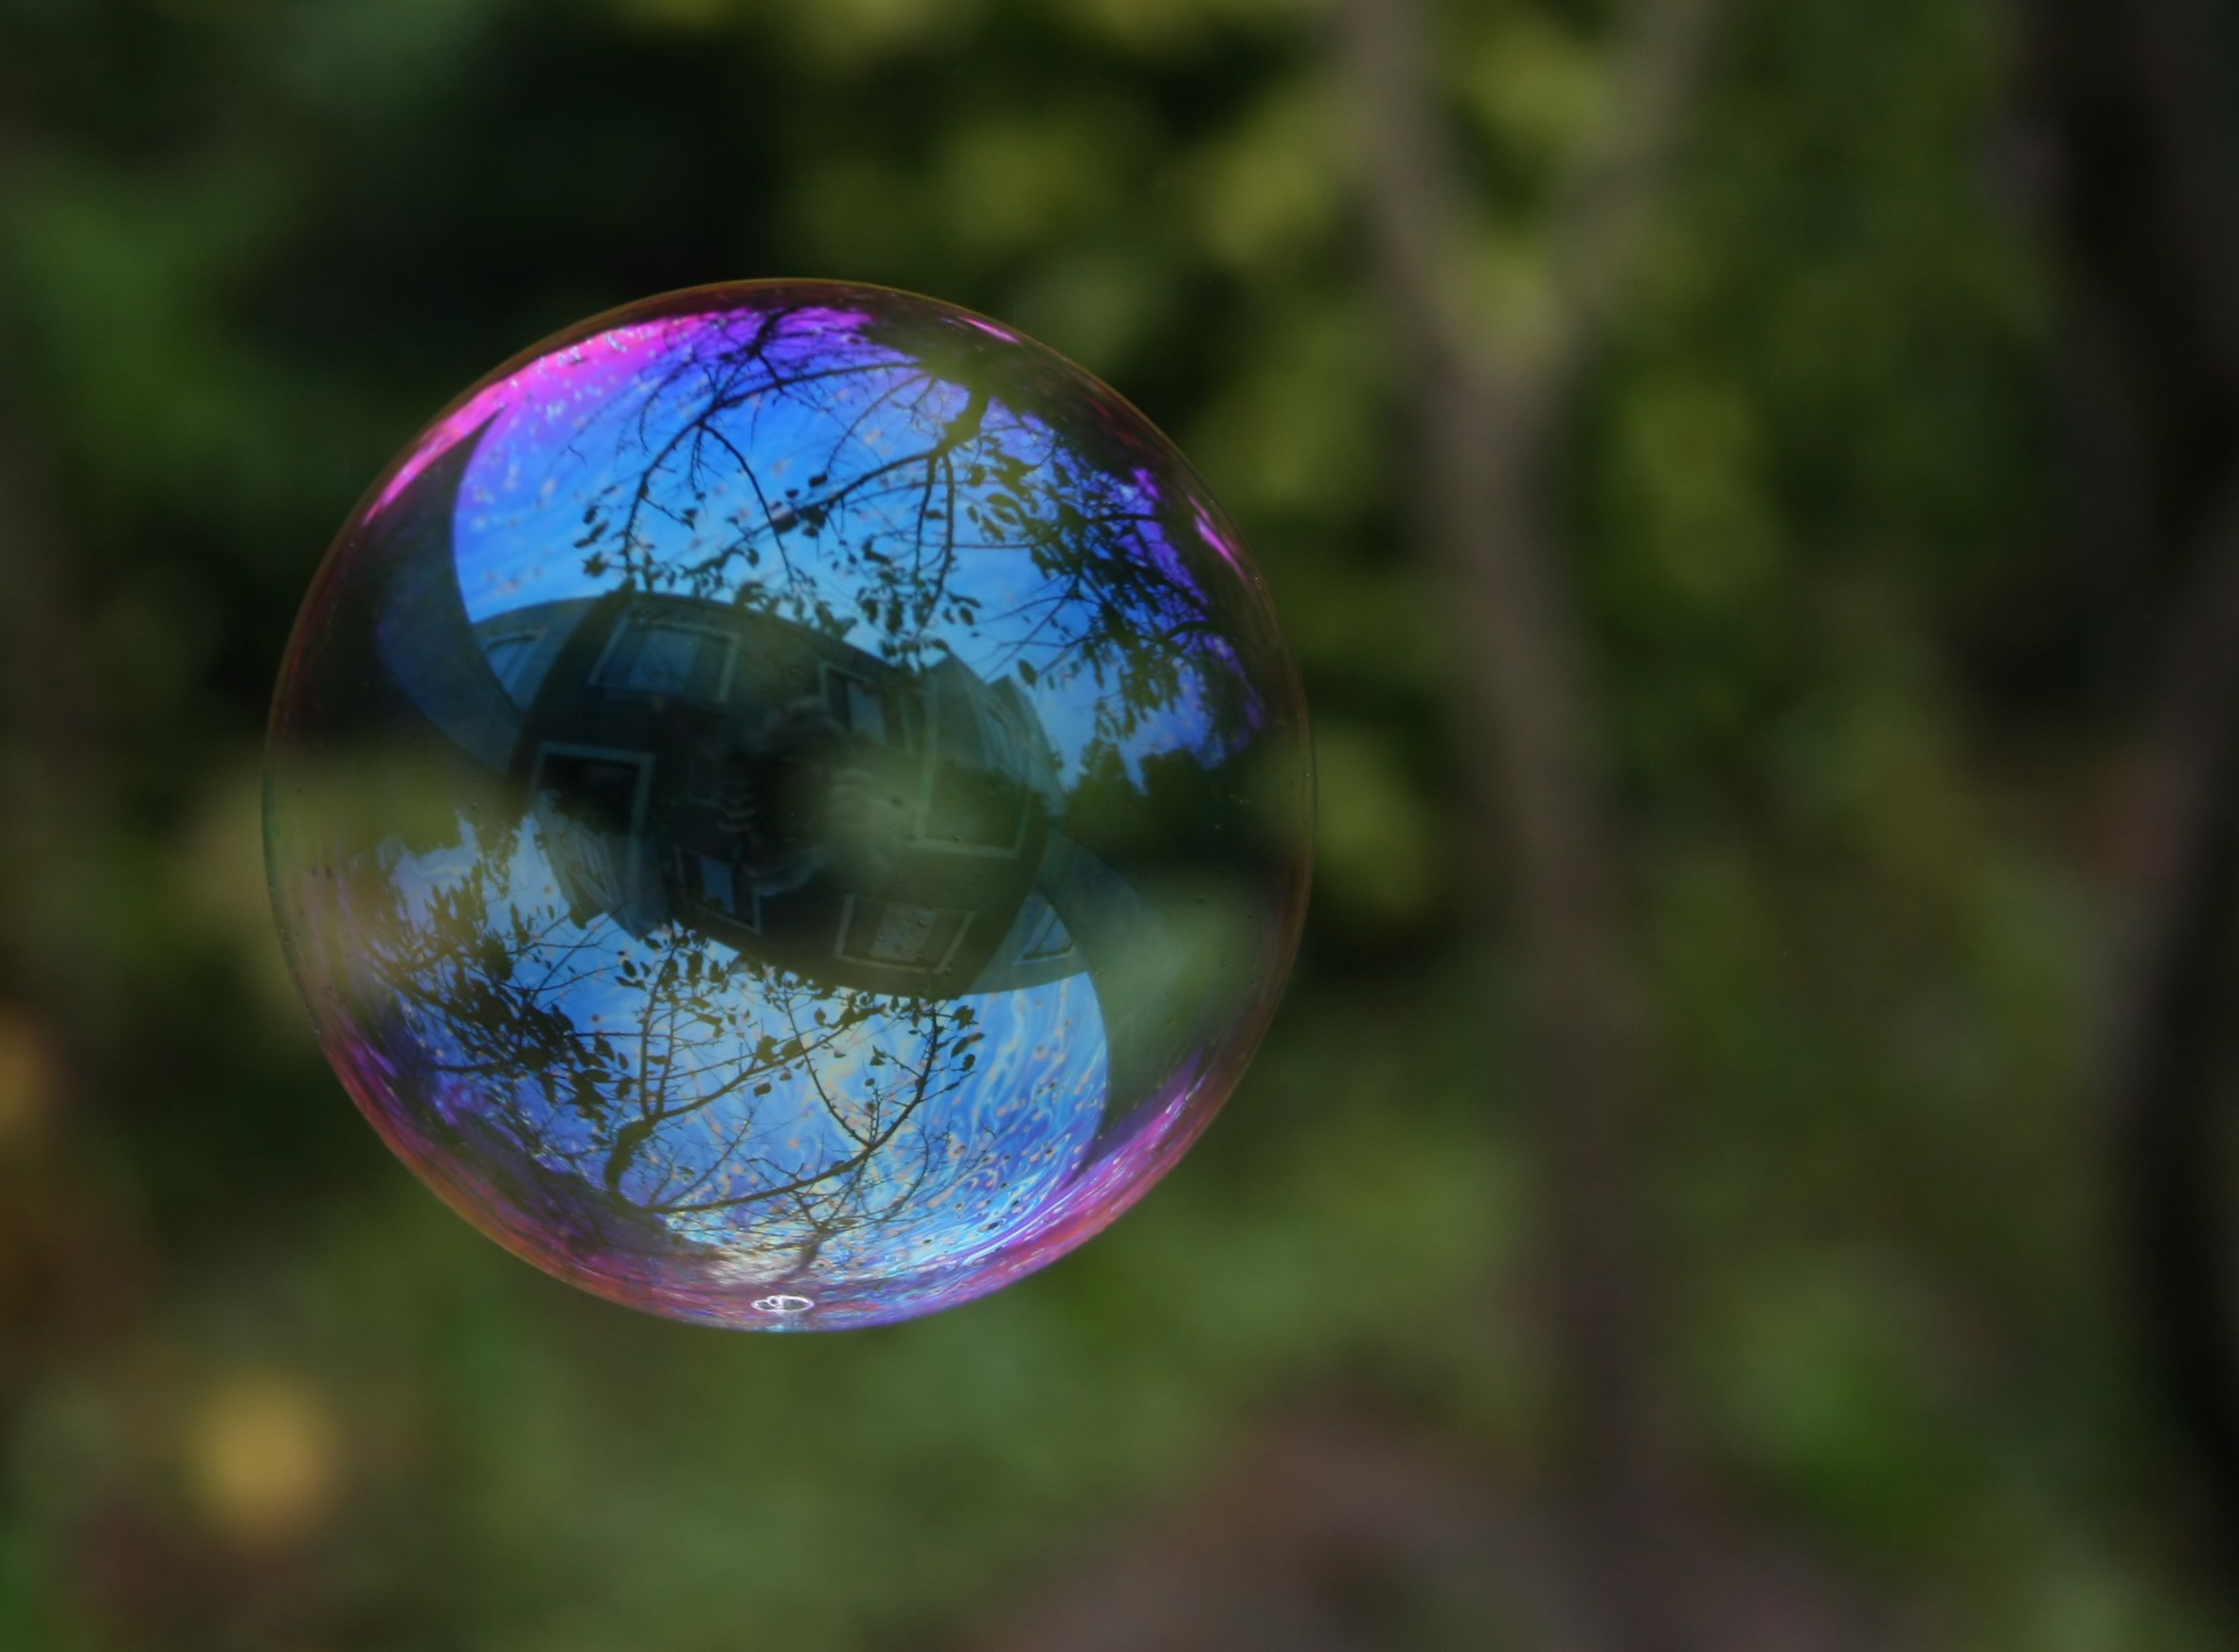 File:Reflection in a soap bubble.jpg - Wikimedia Commons